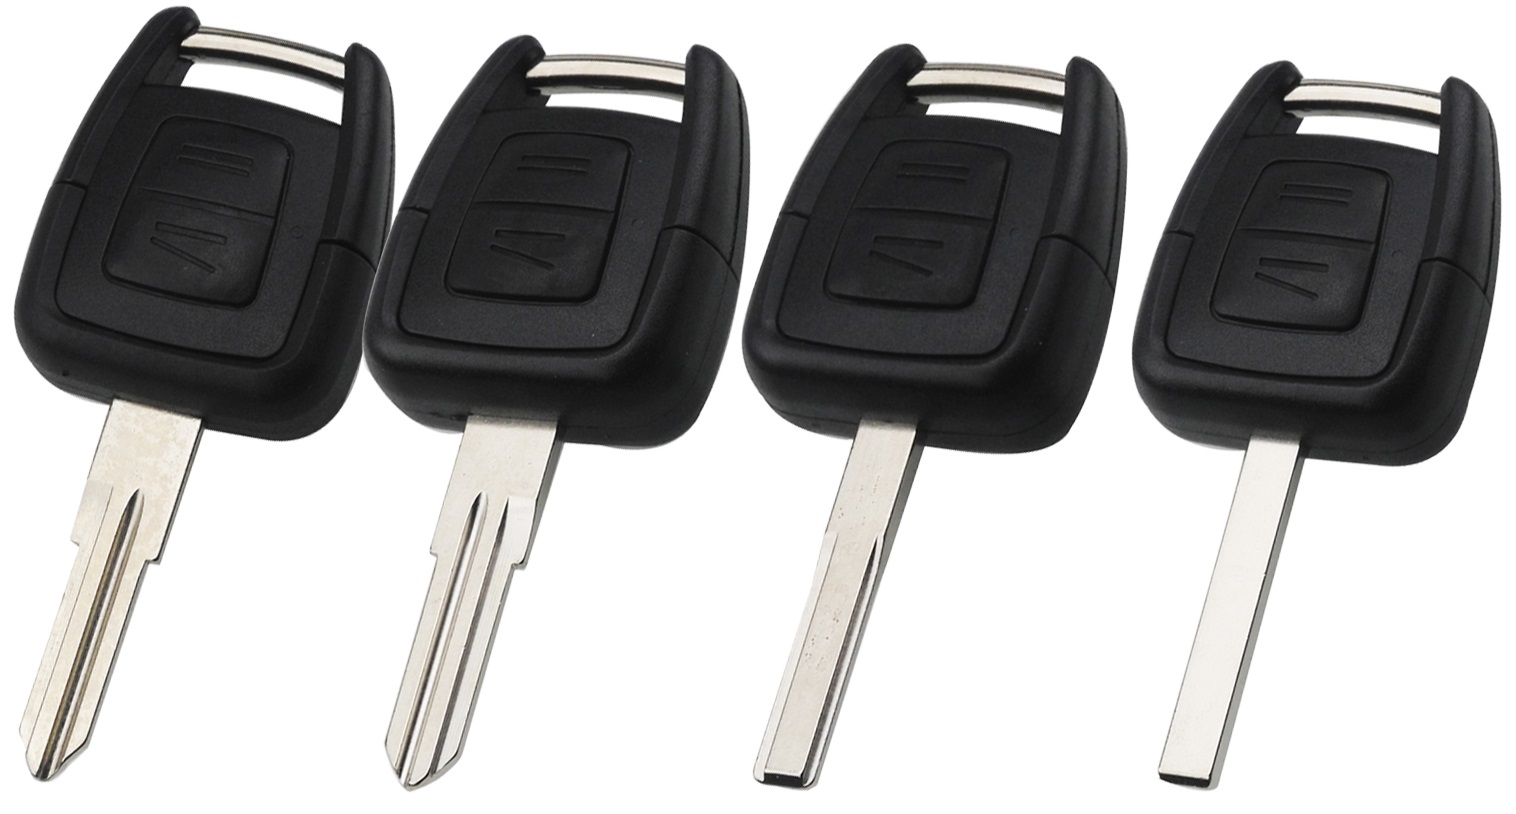 Ключи опель вектра б. Ключ Опель Зафира. Opel Astra g ключ.